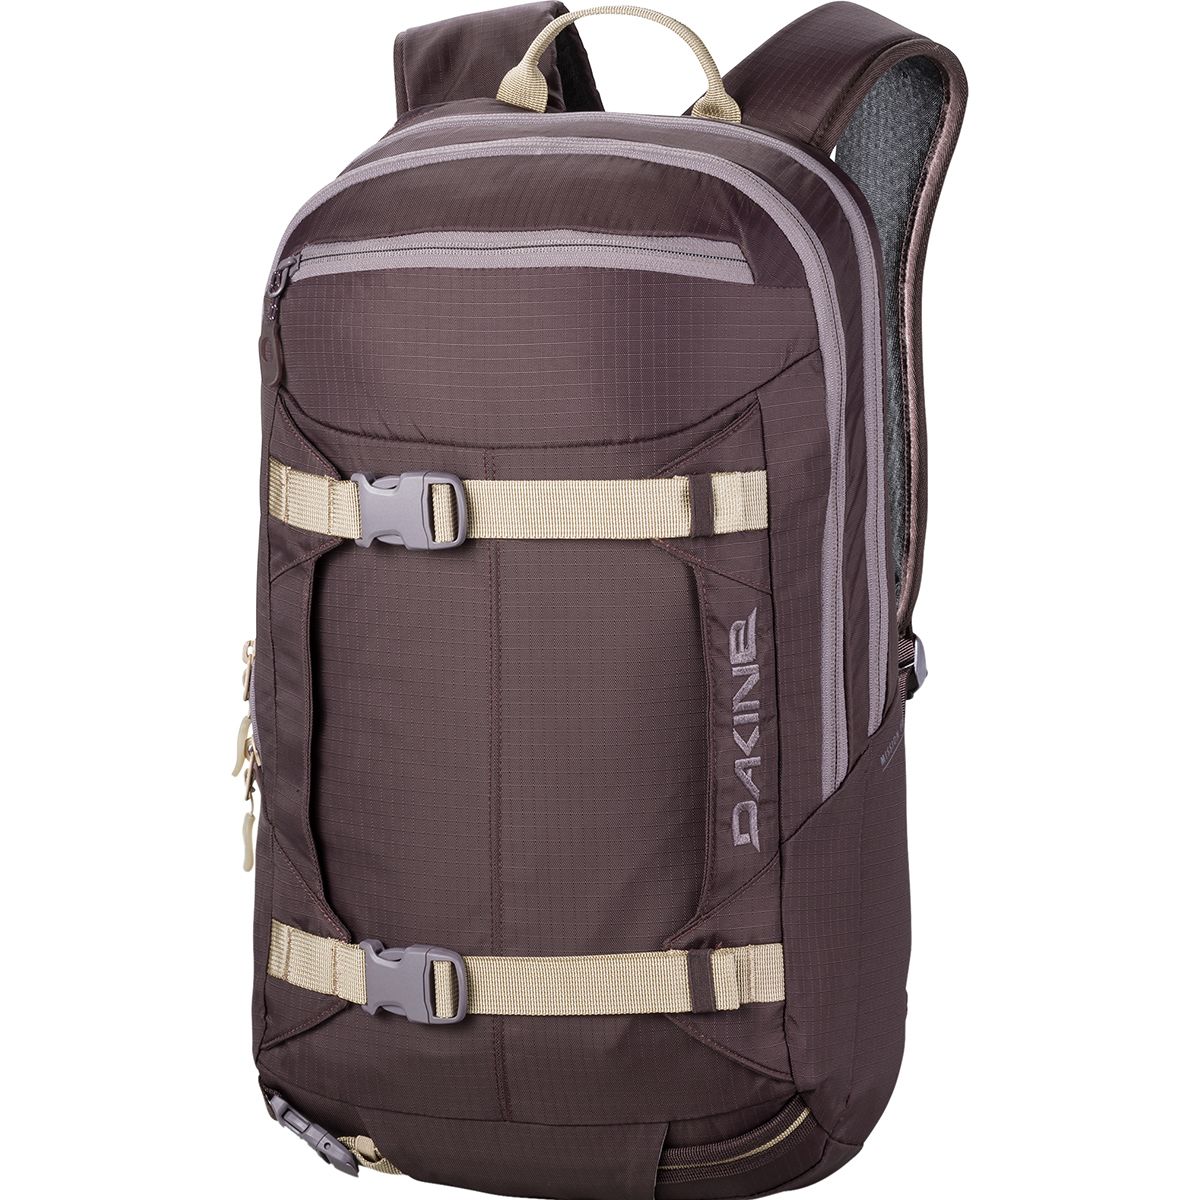 Mission Pro 18L Backpack - Women